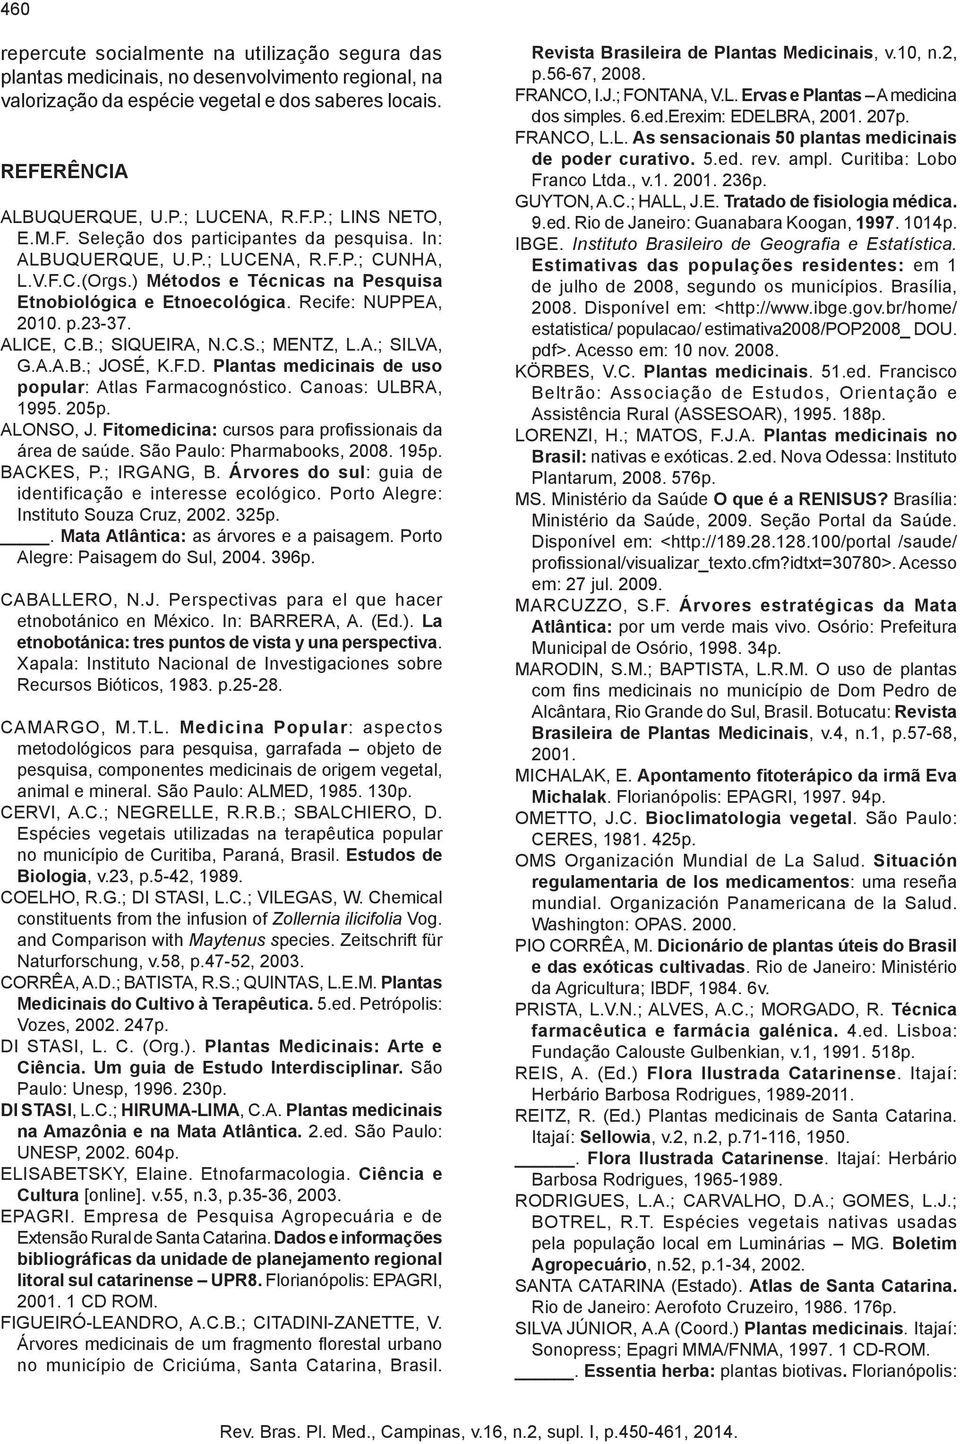 ALICE, C.B.; SIQUEIRA, N.C.S.; MENTZ, L.A.; SILVA, G.A.A.B.; JOSÉ, K.F.D. Plantas medicinais de uso popular: Atlas Farmacognóstico. Canoas: ULBRA, 1995. 205p. ALONSO, J.